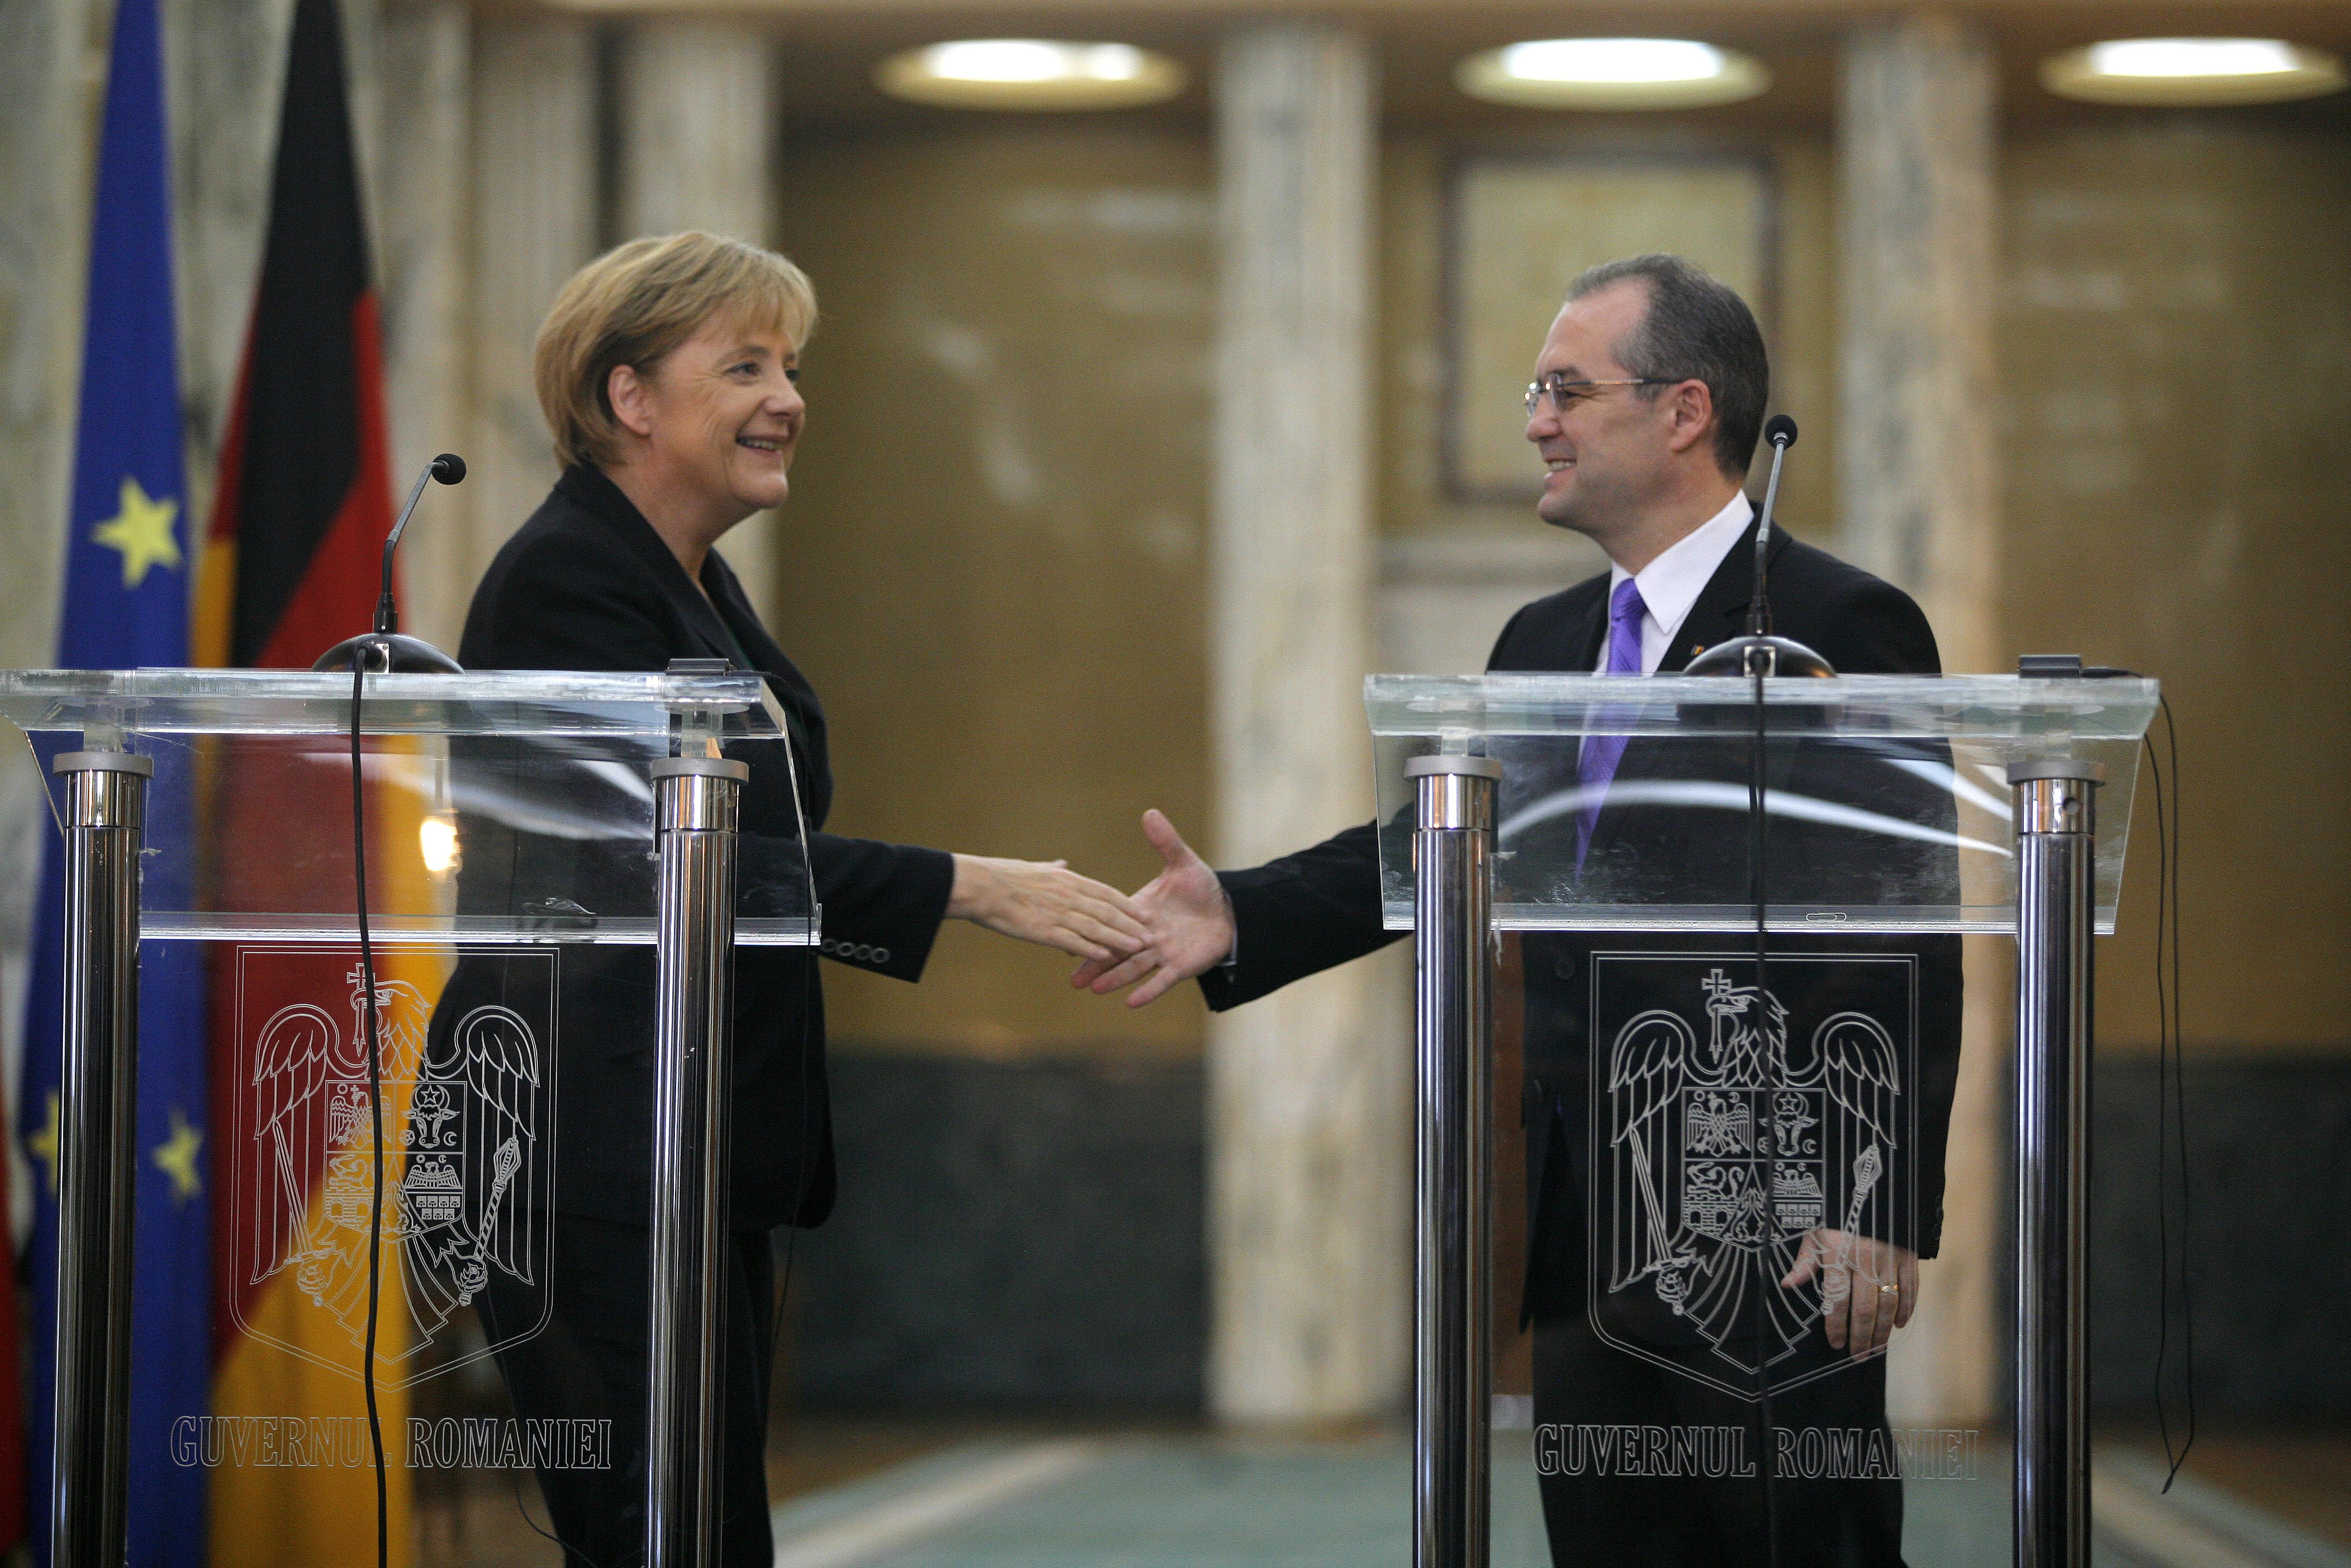 <b>Ρουμανία </b>Η Μέρκελ στηρίζει την ένταξη της χώρας στο Σένγκεν